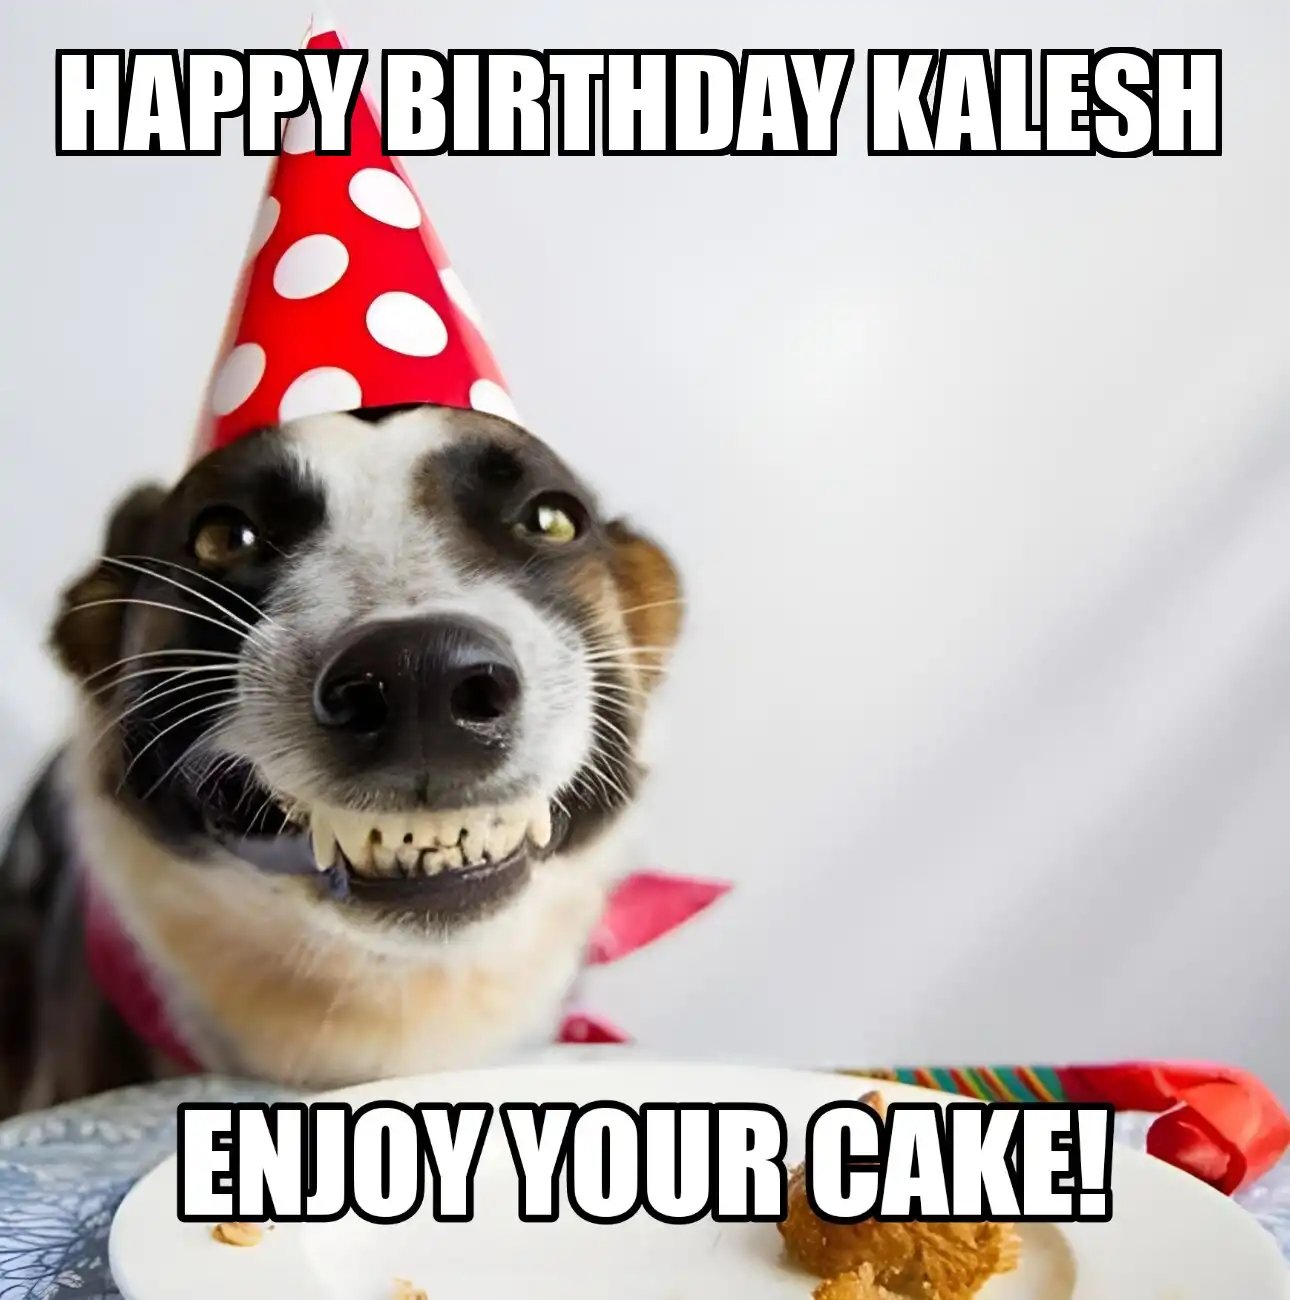 Happy Birthday Kalesh Enjoy Your Cake Dog Meme